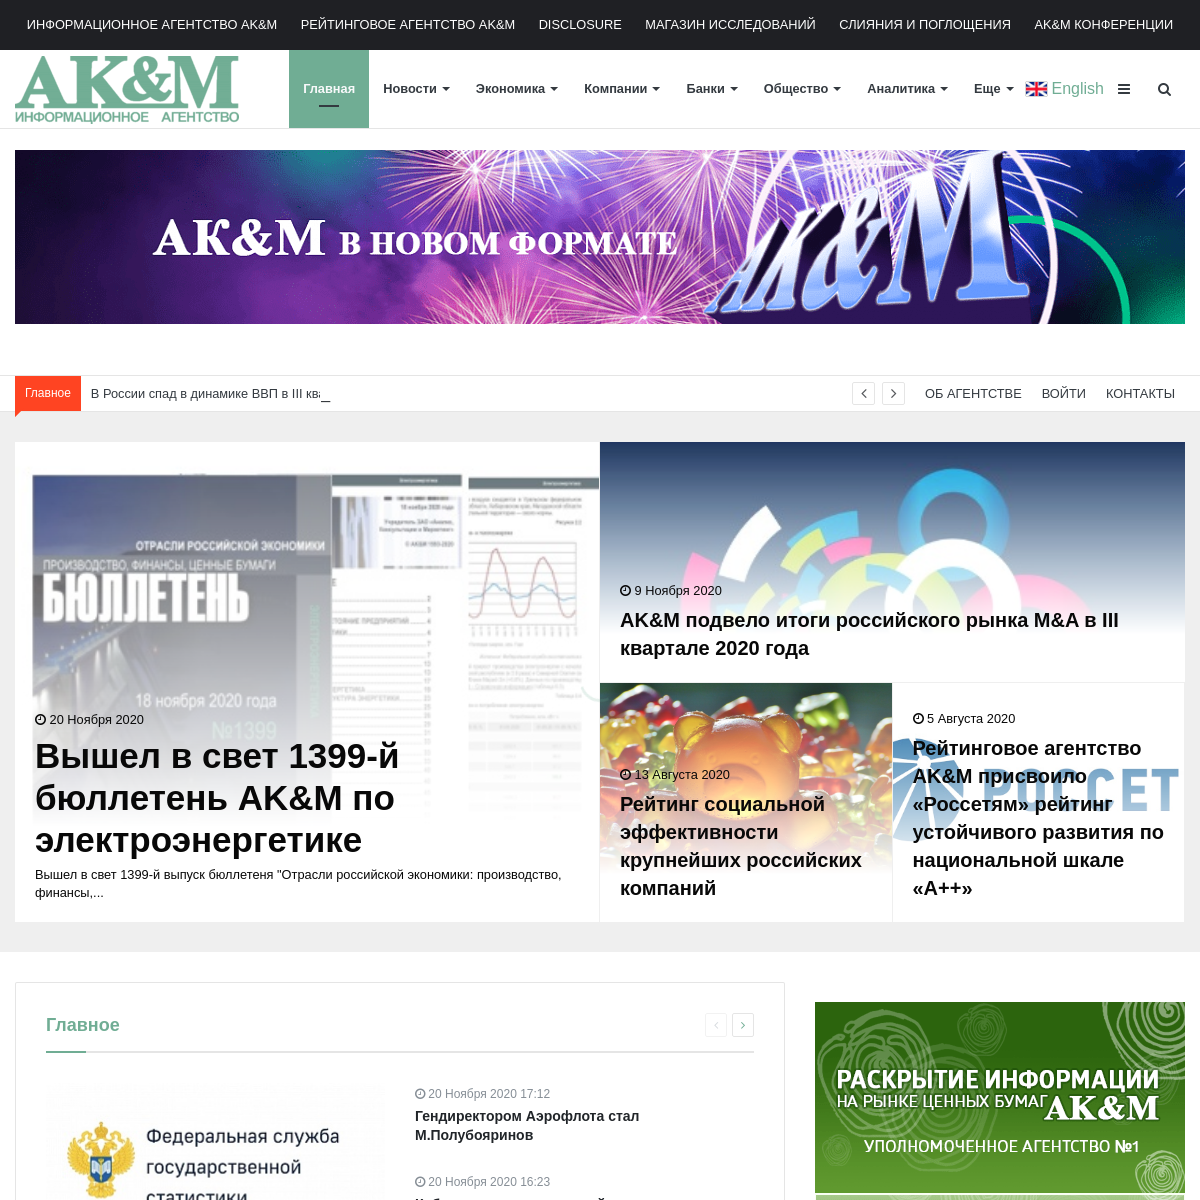 A complete backup of akm.ru